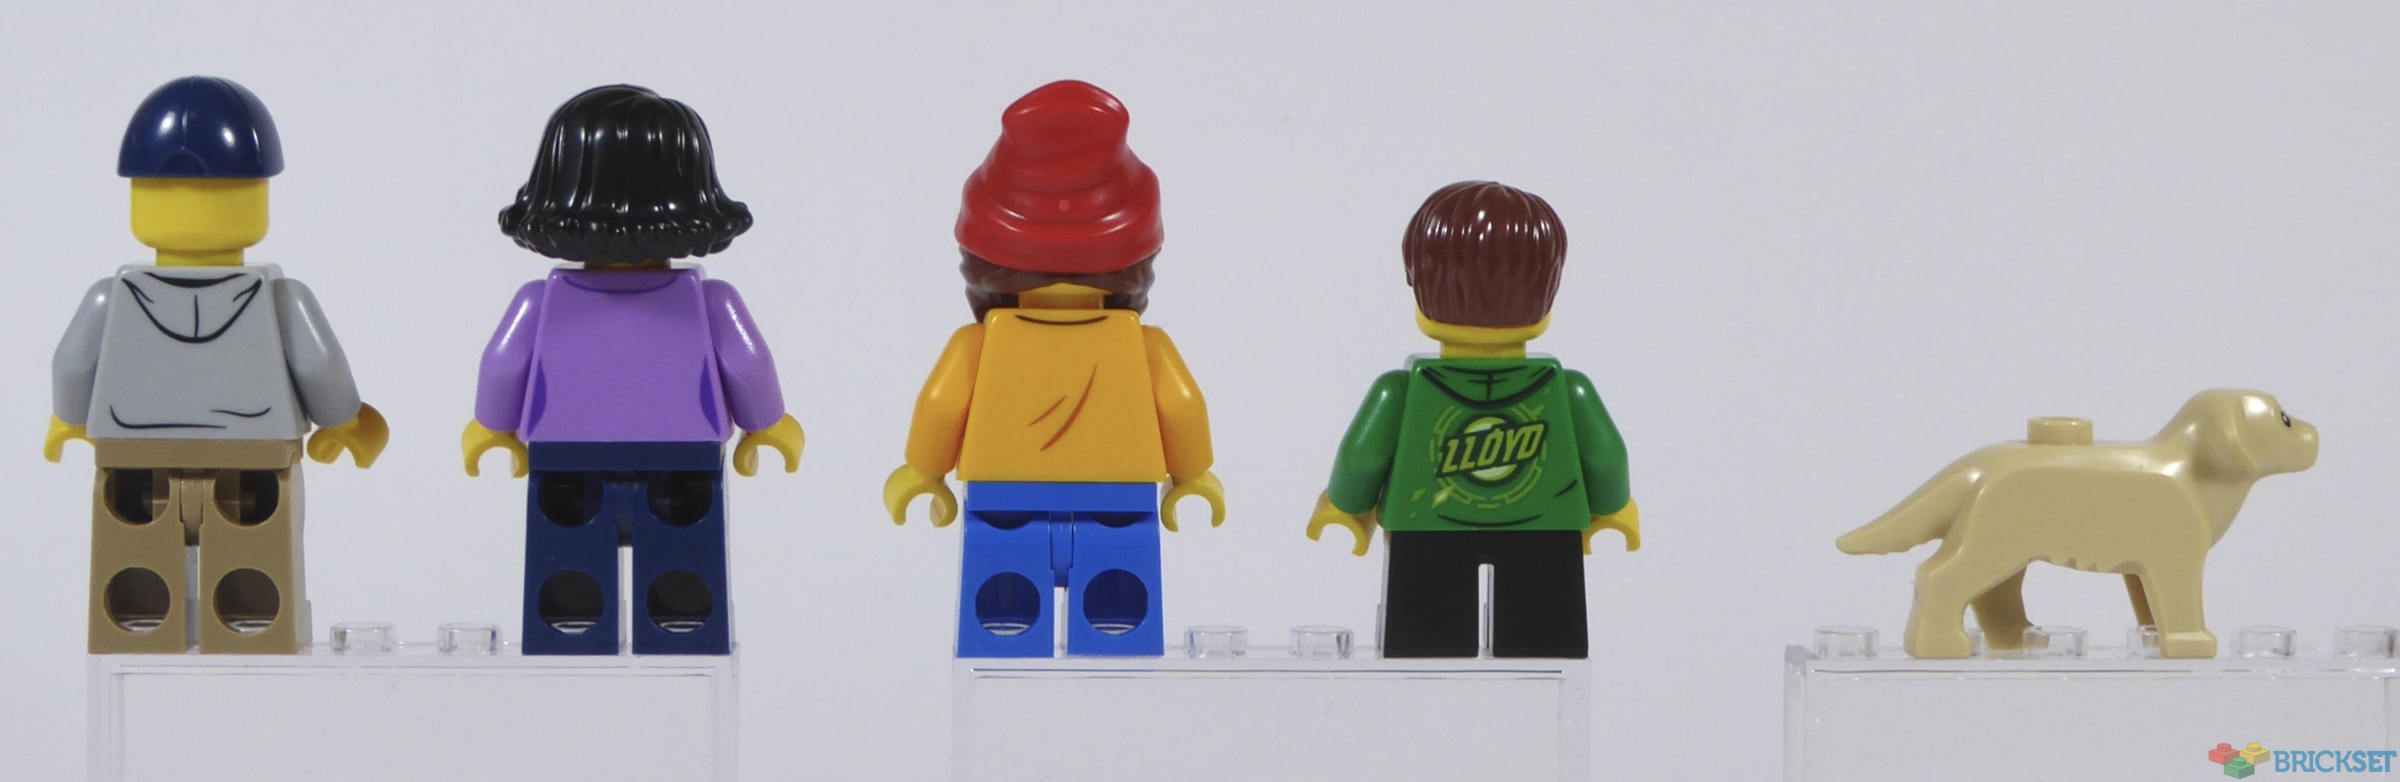 LEGO 60291 Family House review | Brickset